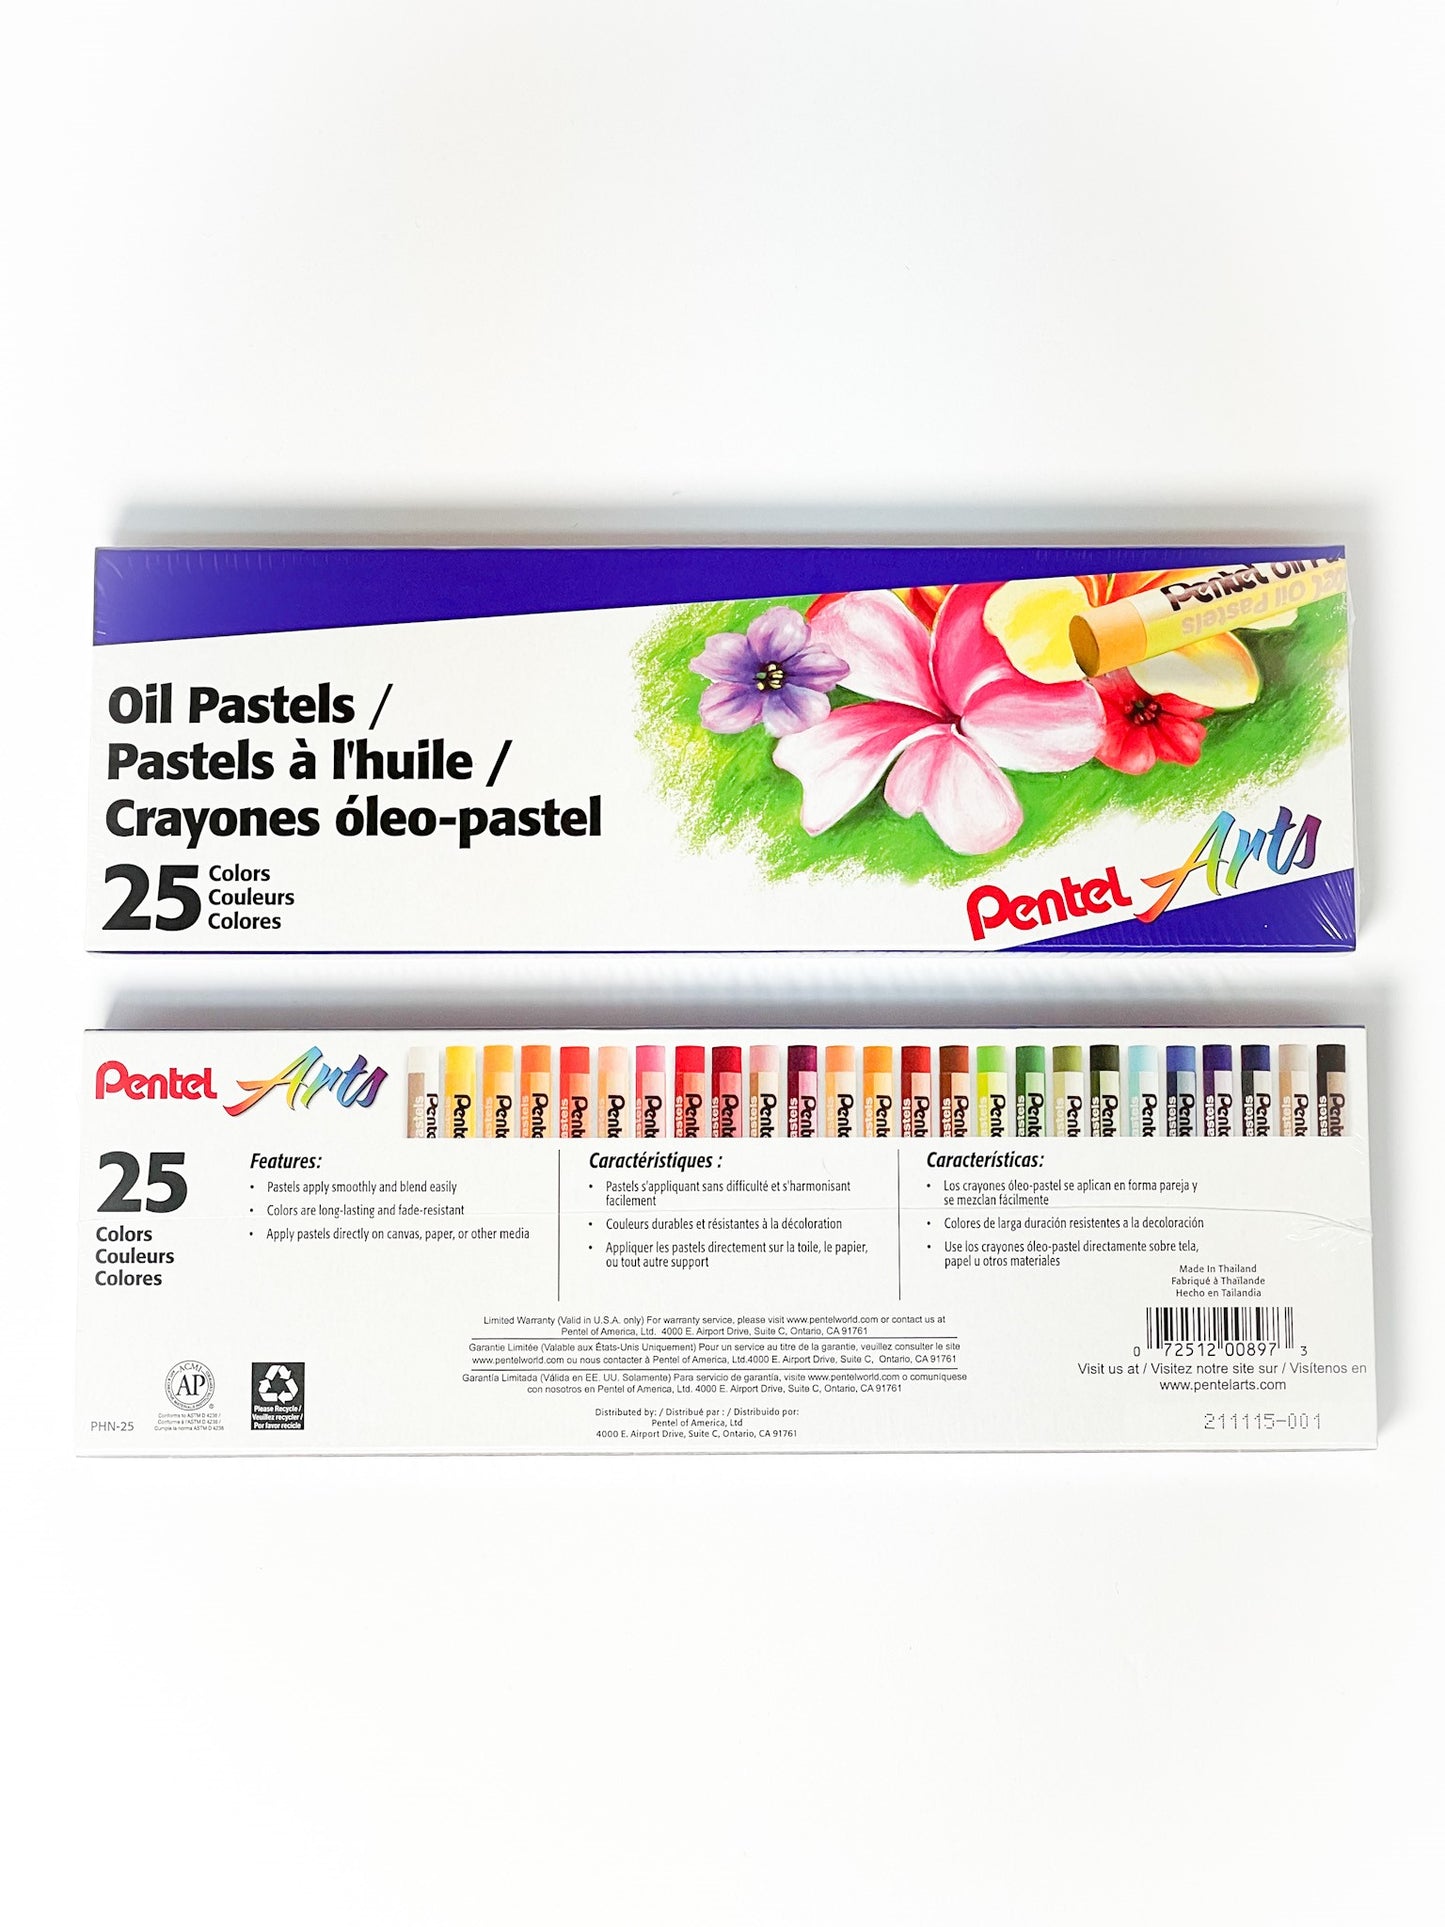 Pentel Arts Oil Pastel Sets (sets of 12, 16, 25, and 50)